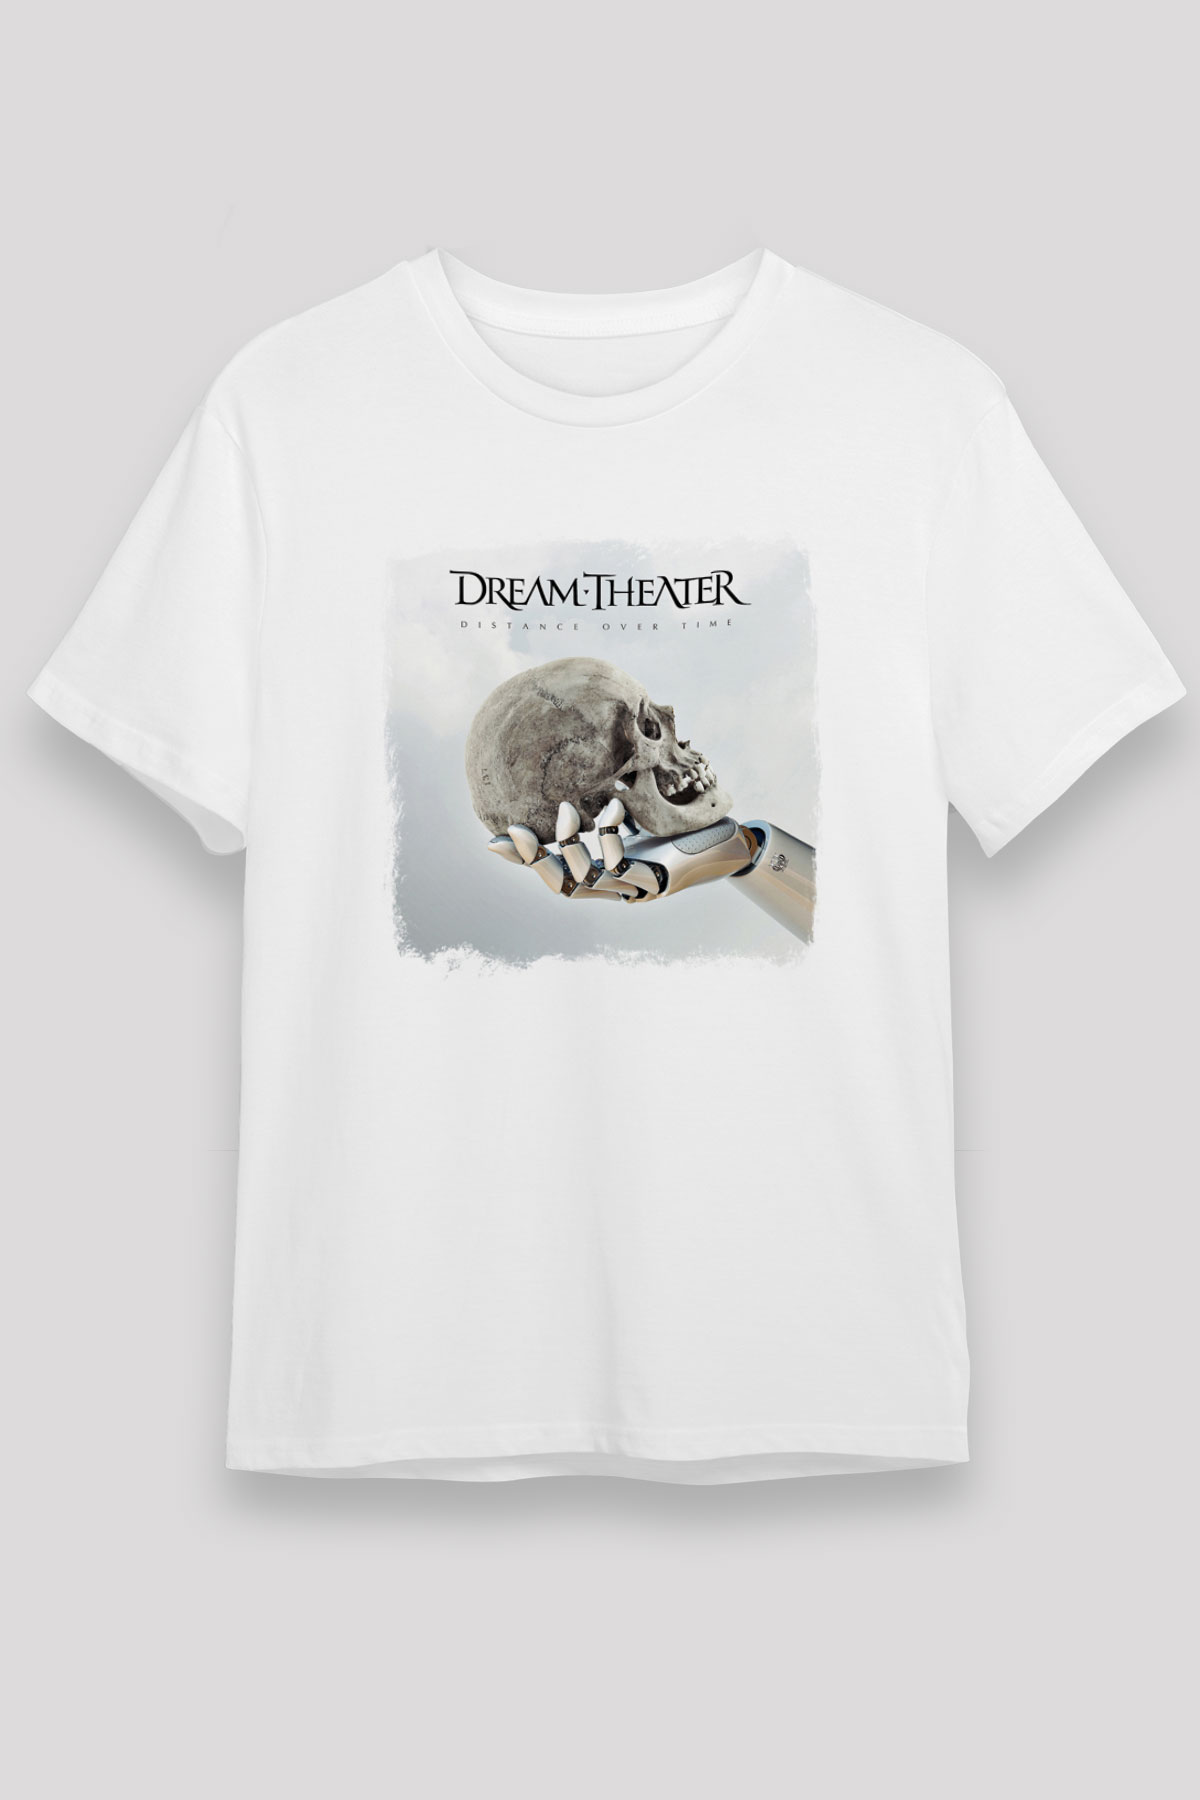 Dream Theater T shirt,Music Band,Unisex Tshirt 15